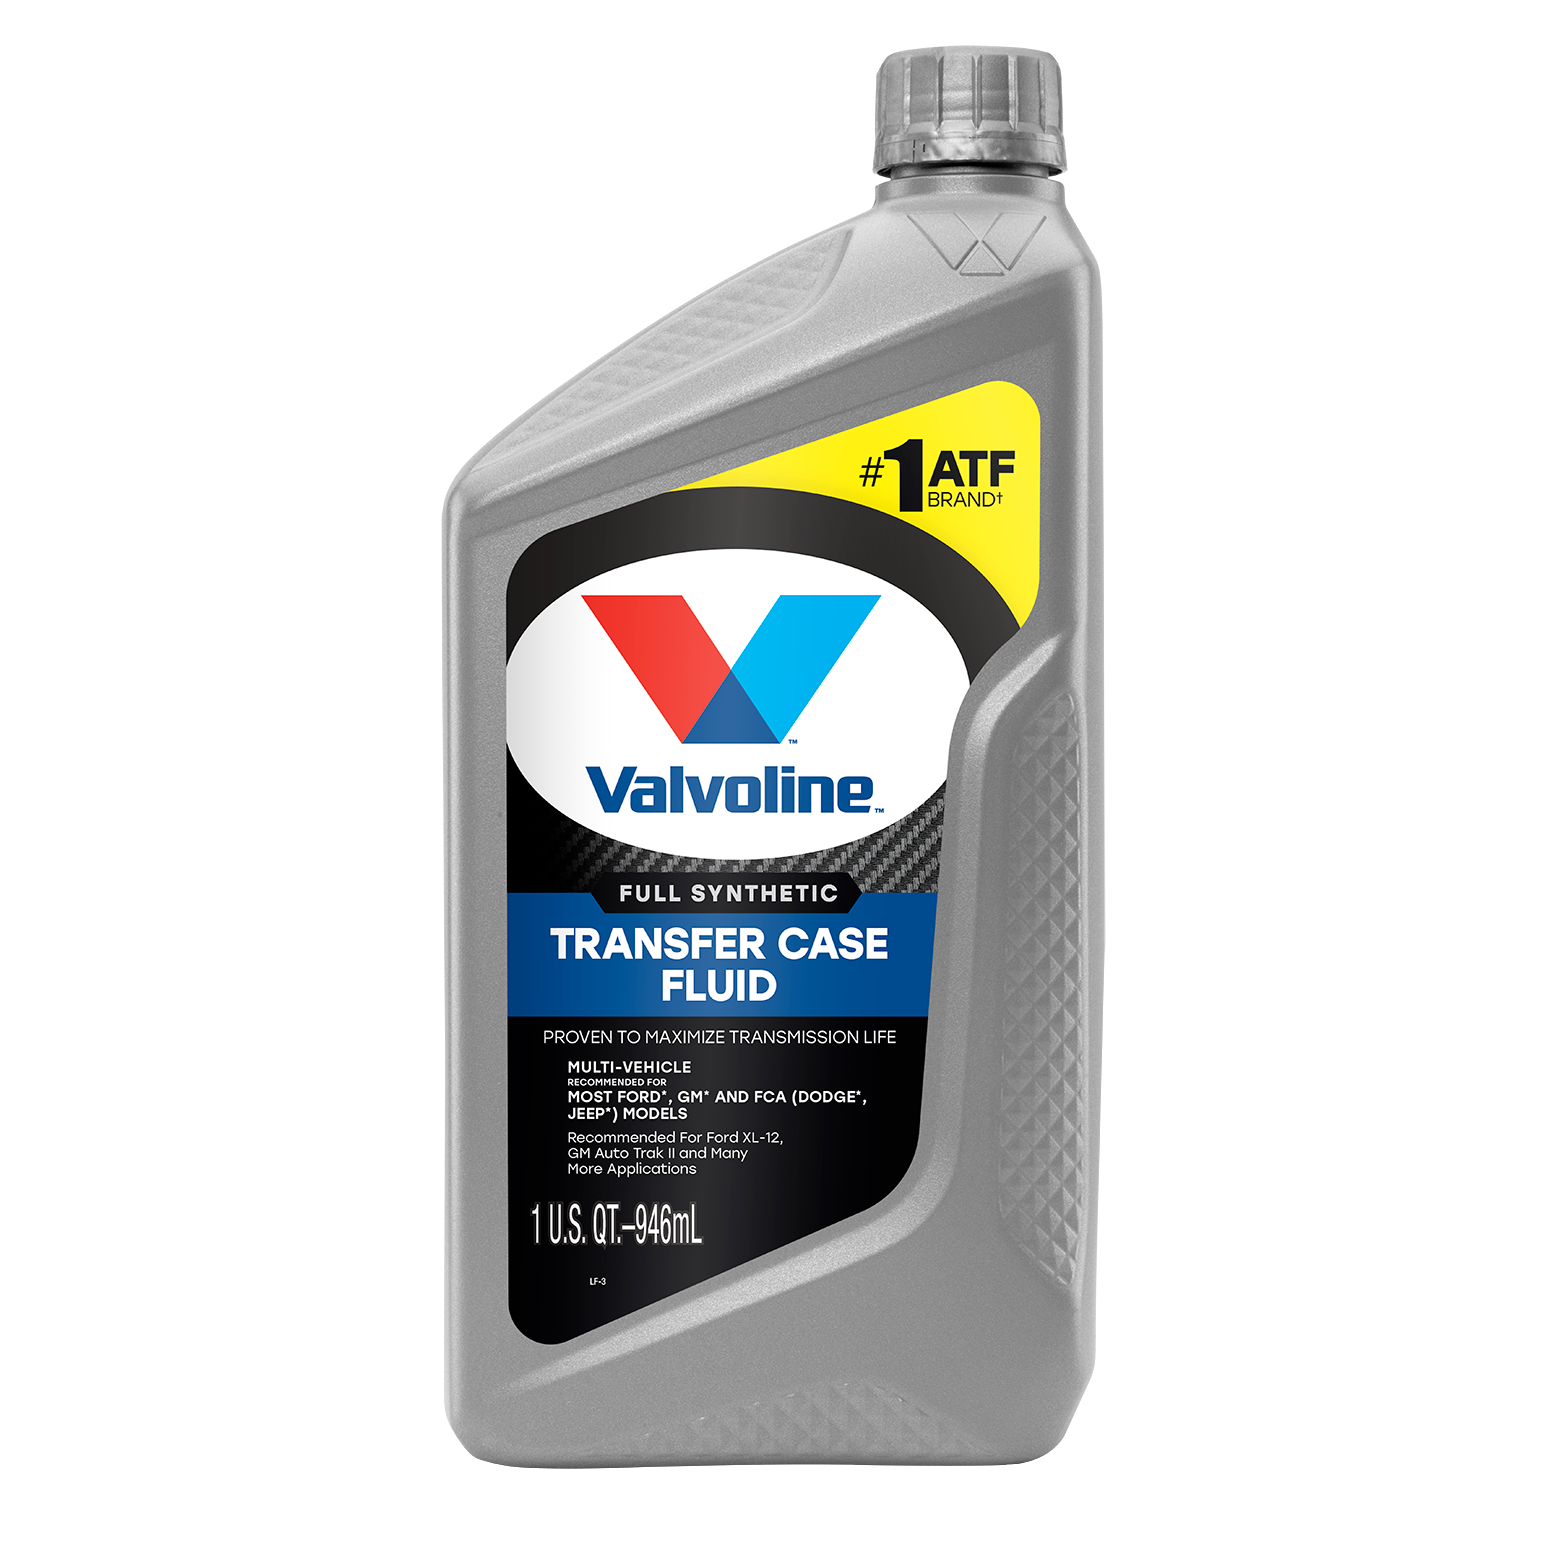  Valvoline Import Multi-Vehicle (ATF) Full Synthetic